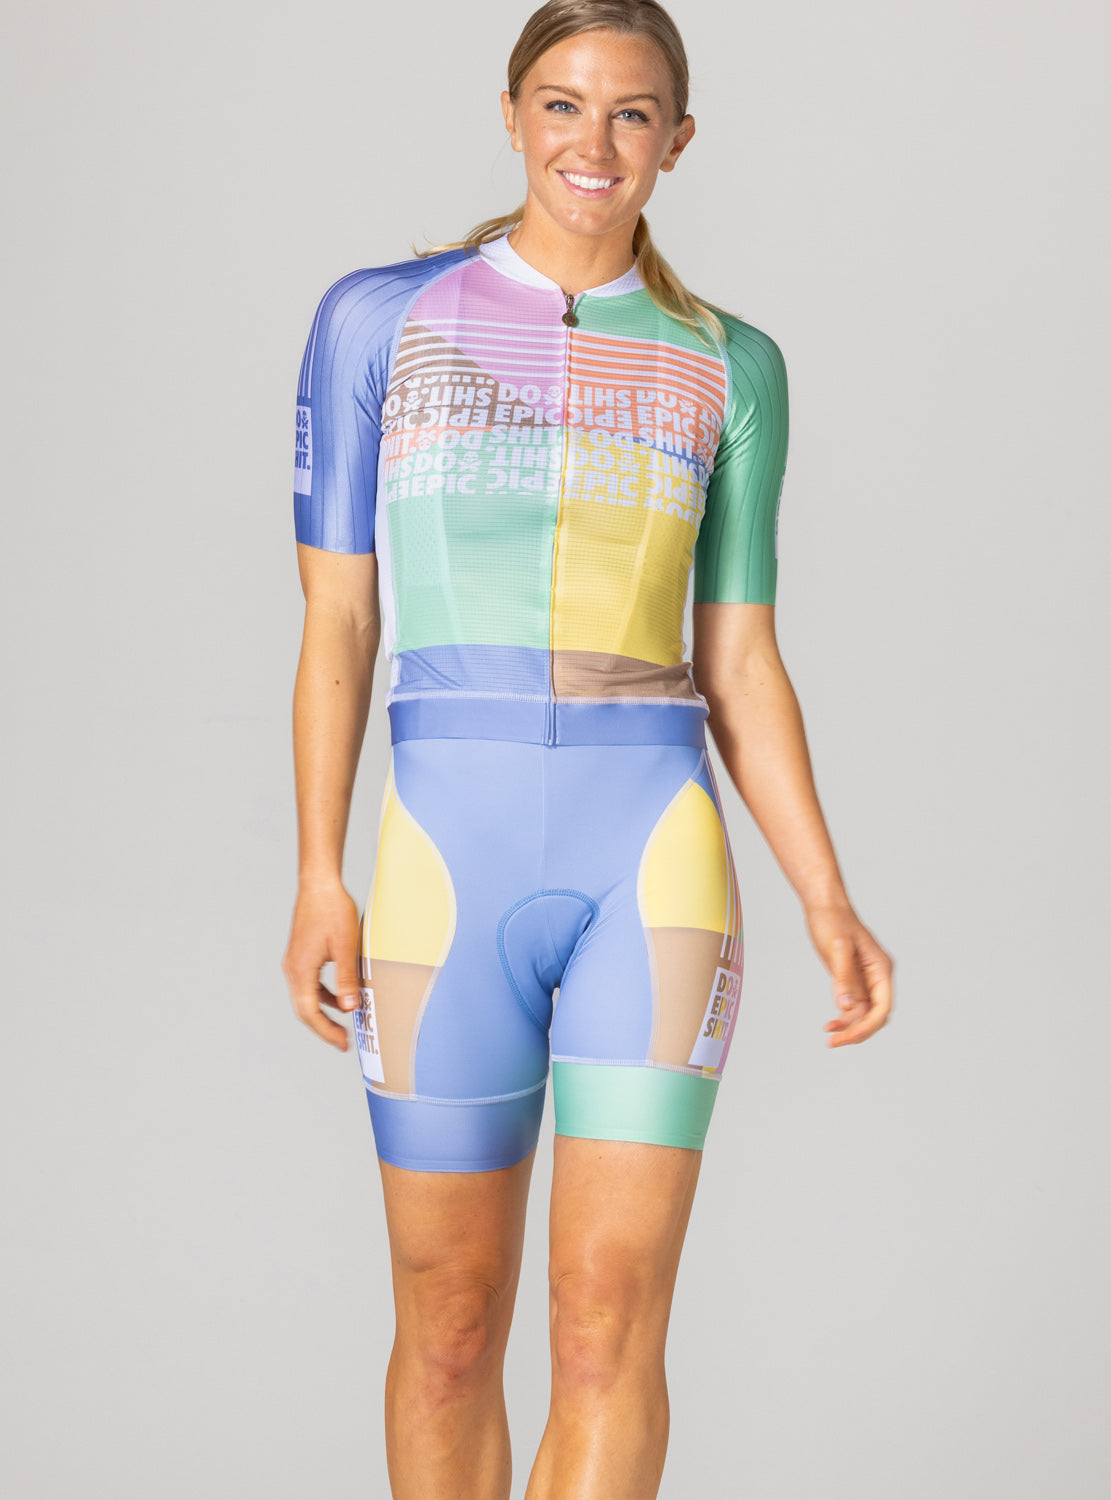 betty designs do epic shit womens cycling jersey cycling short